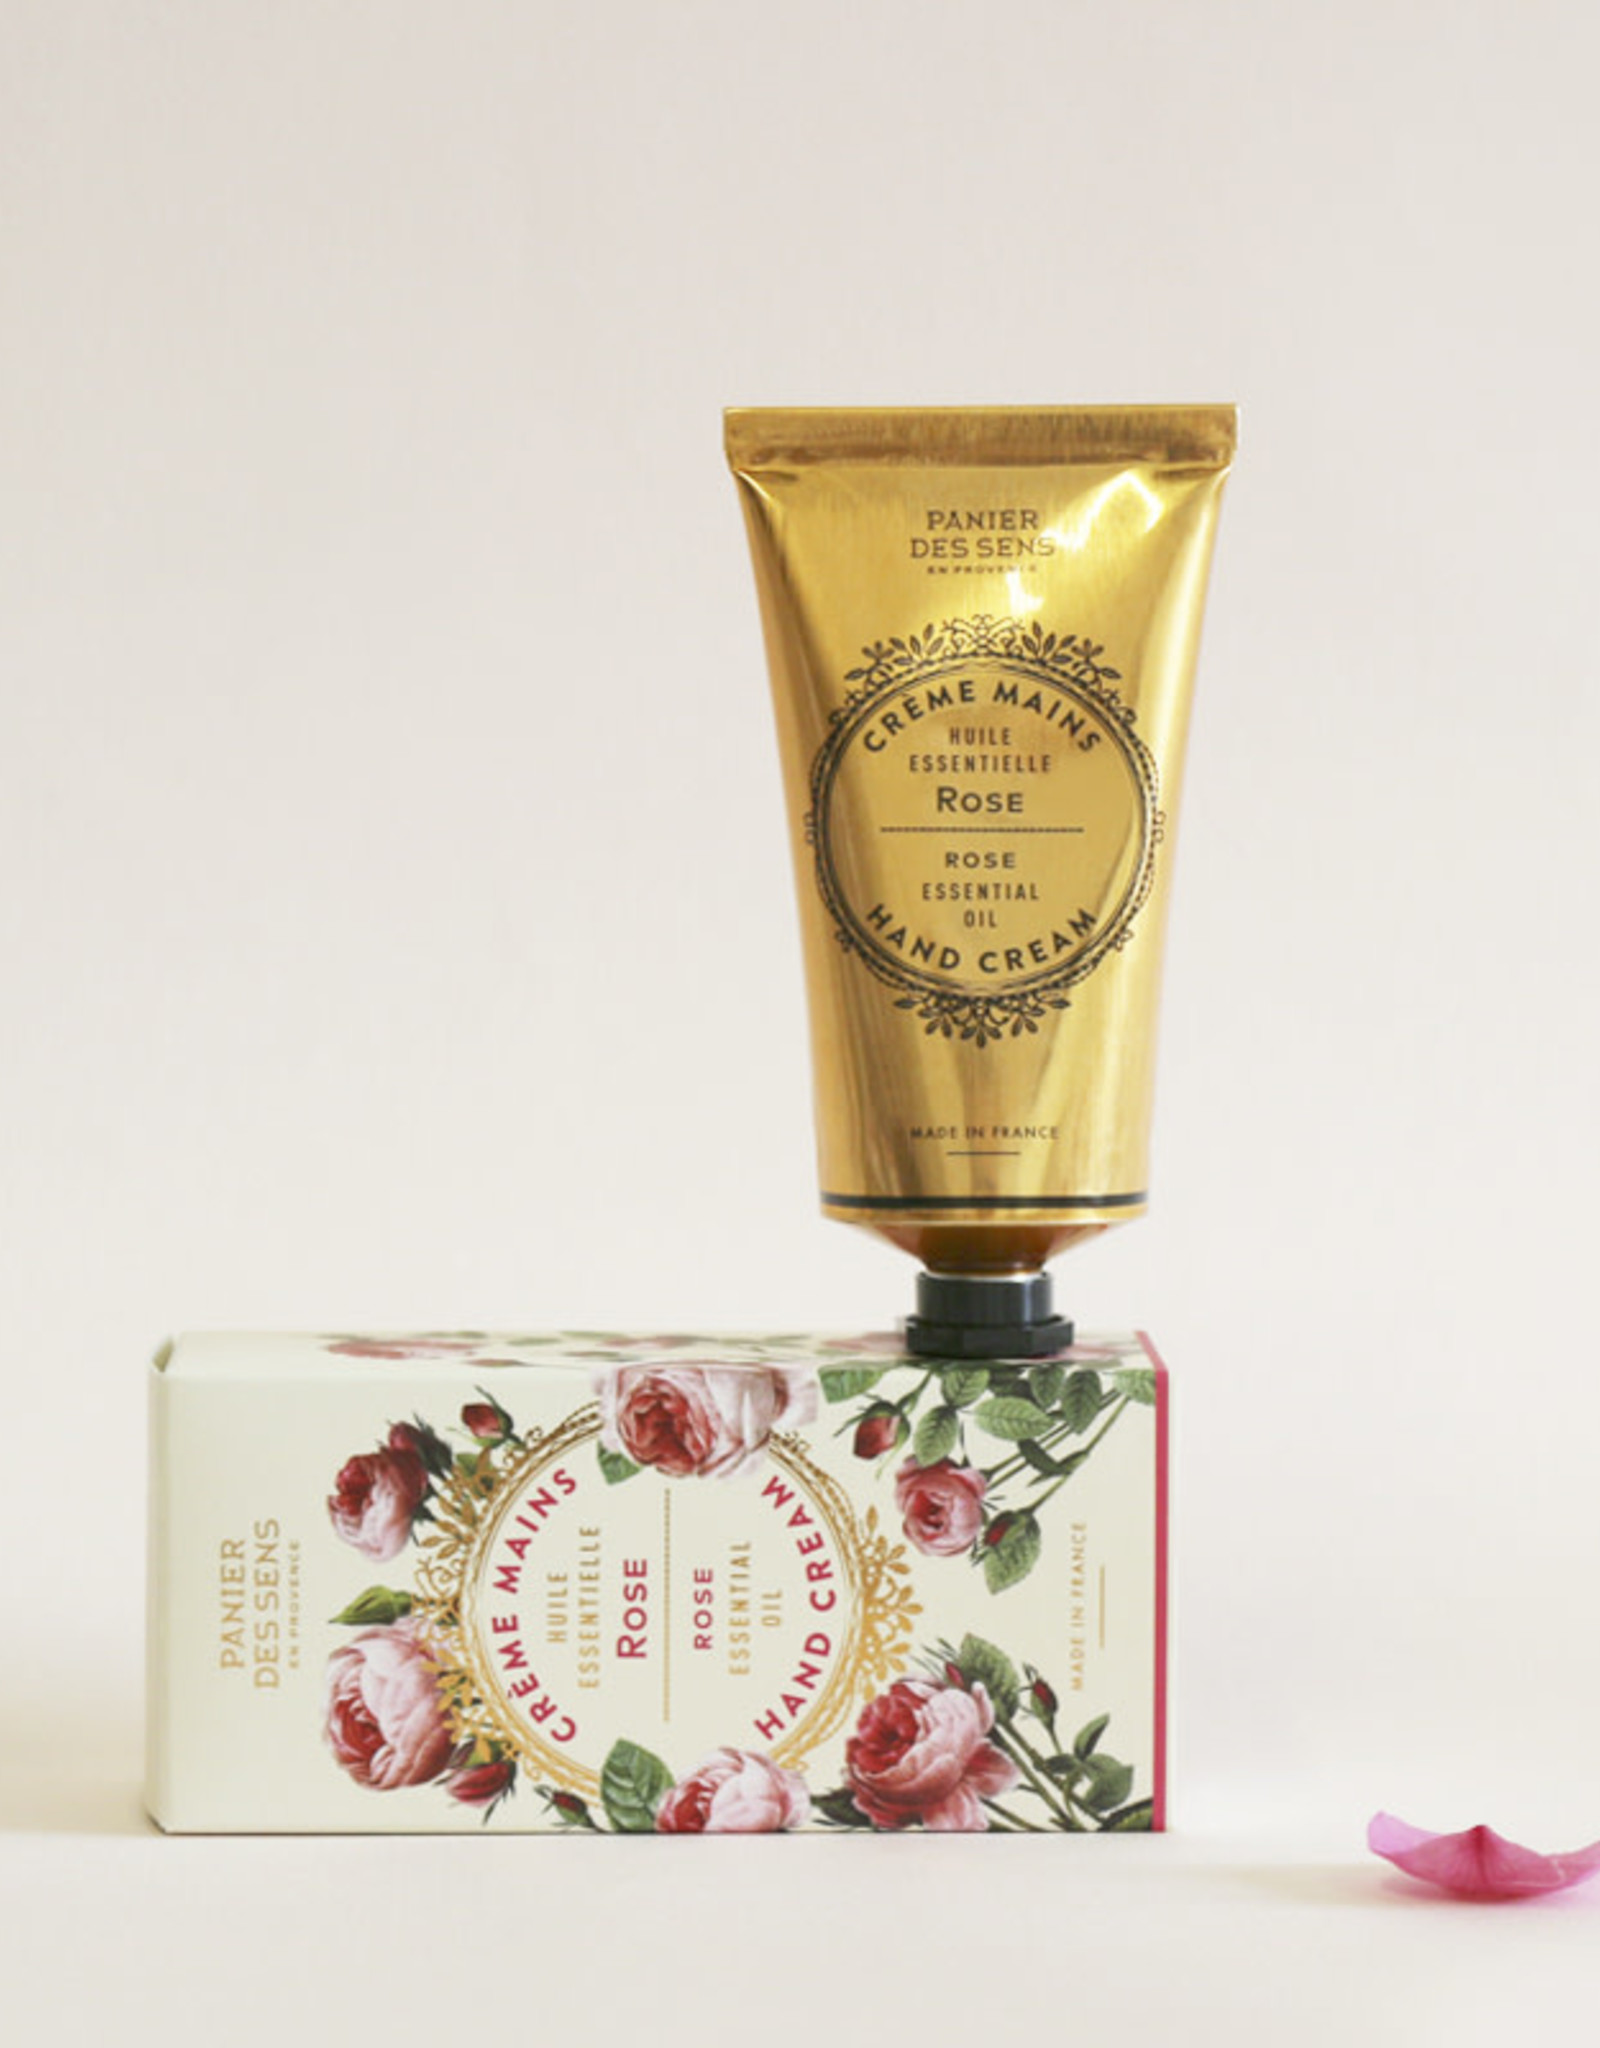 Panier Des Sens "Rejuvenating Rose" Hand Cream - 2.6 oz.  Panier Des Sens